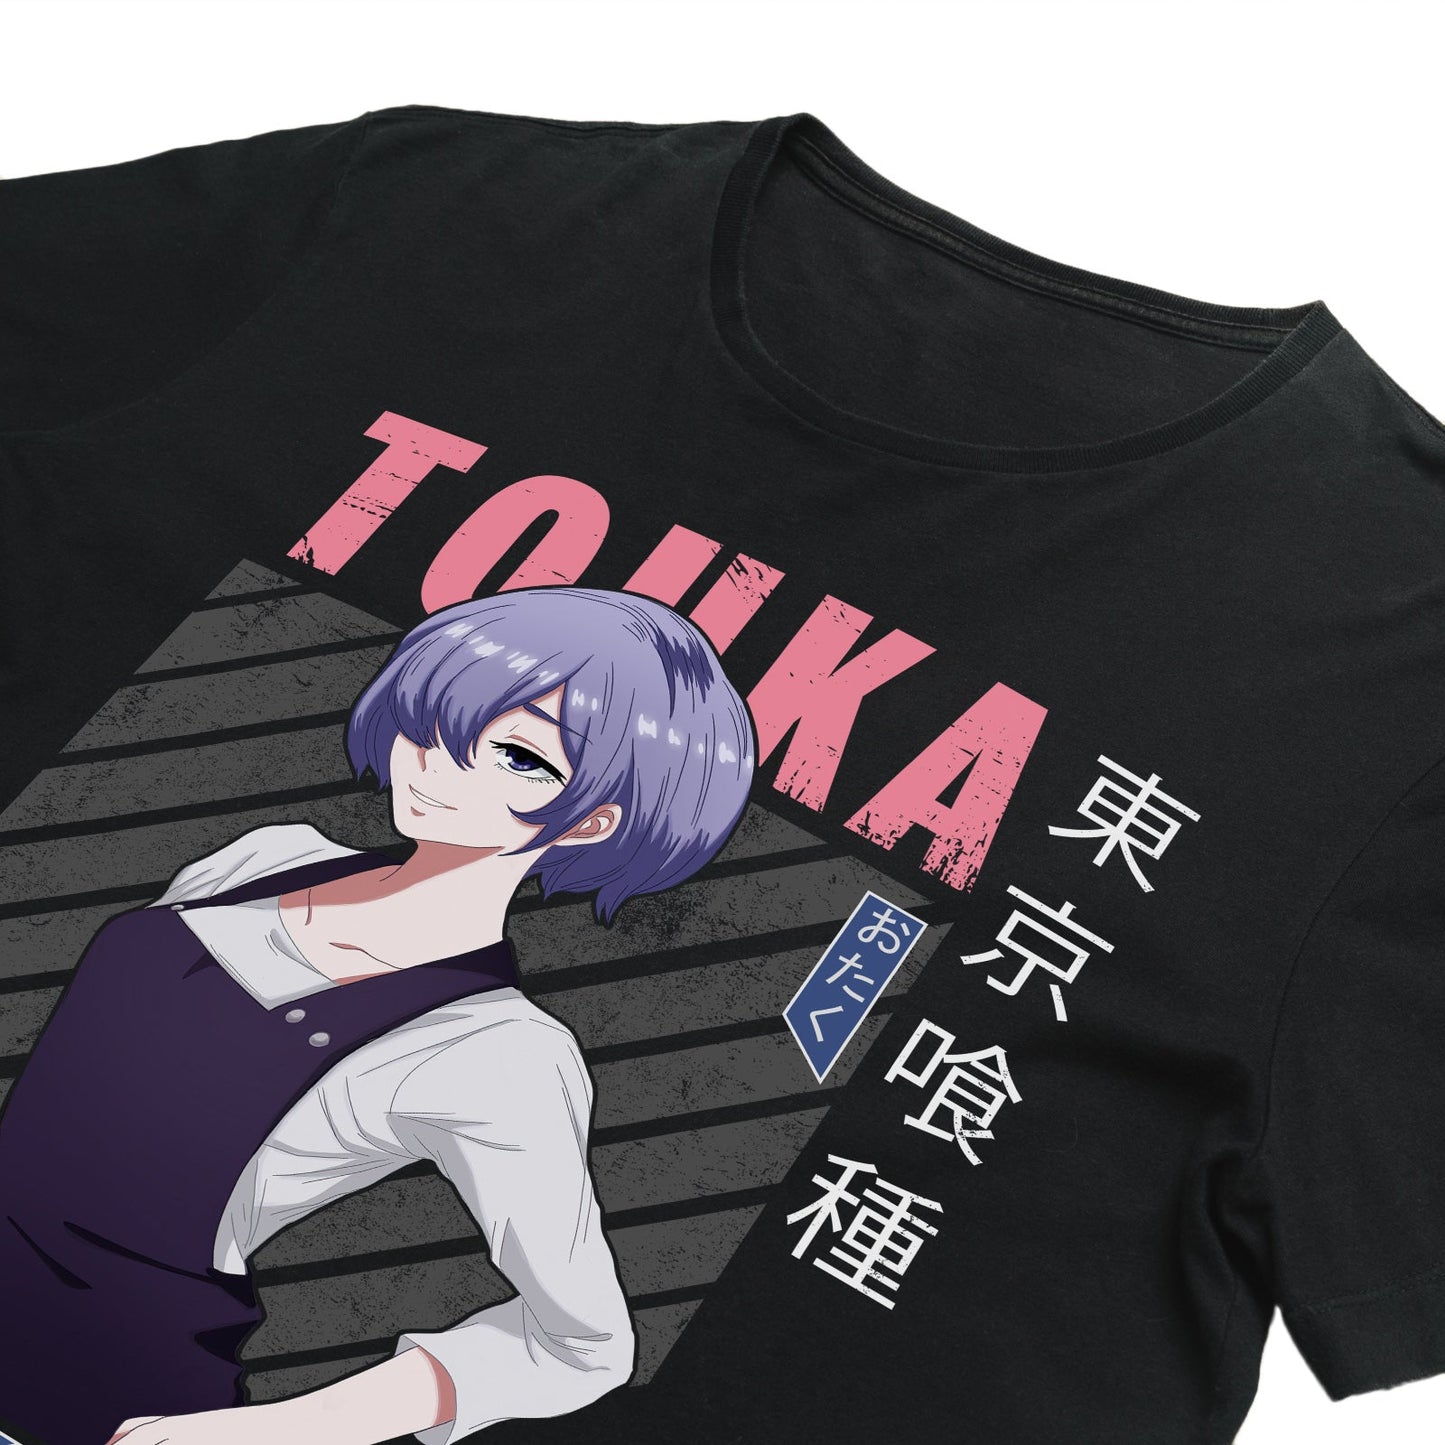 Camiseta Tokyo Ghoul Ver. 5